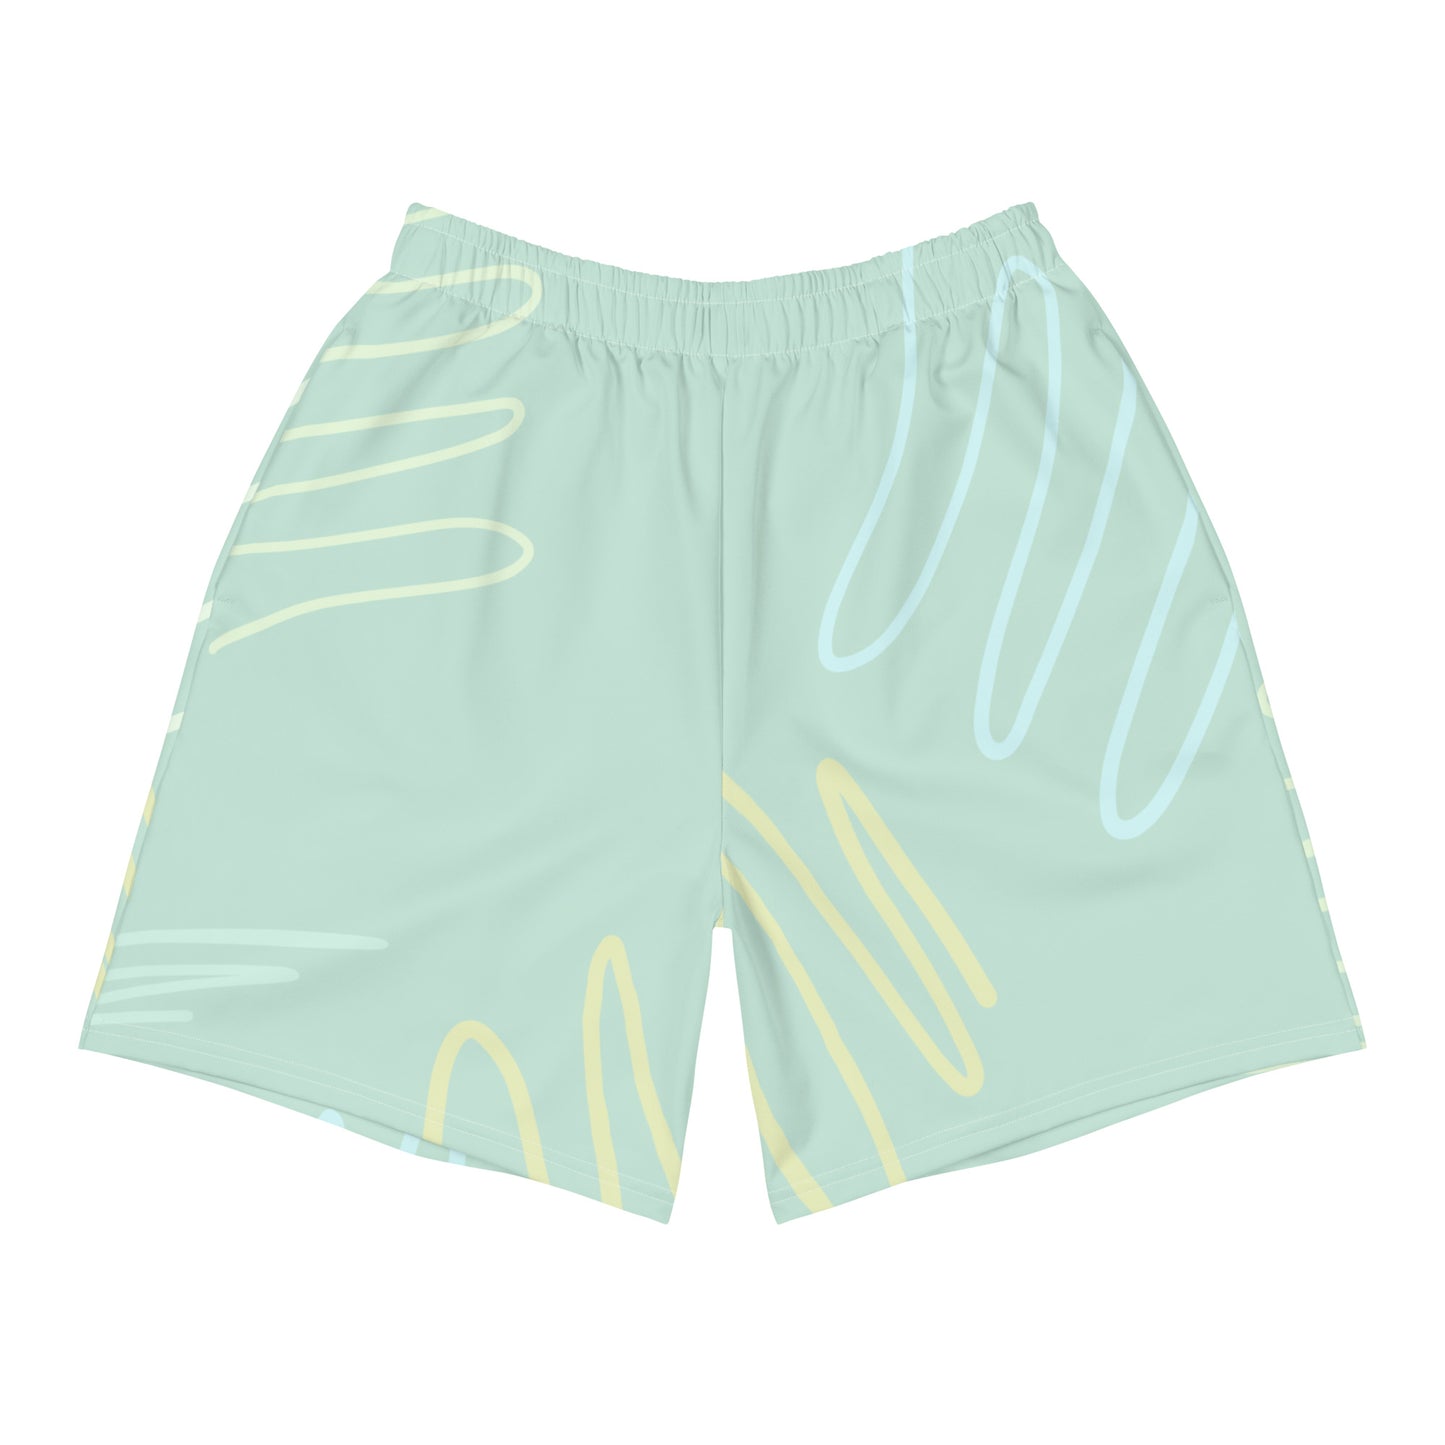 Men's [UV Protective] Athletic Shorts